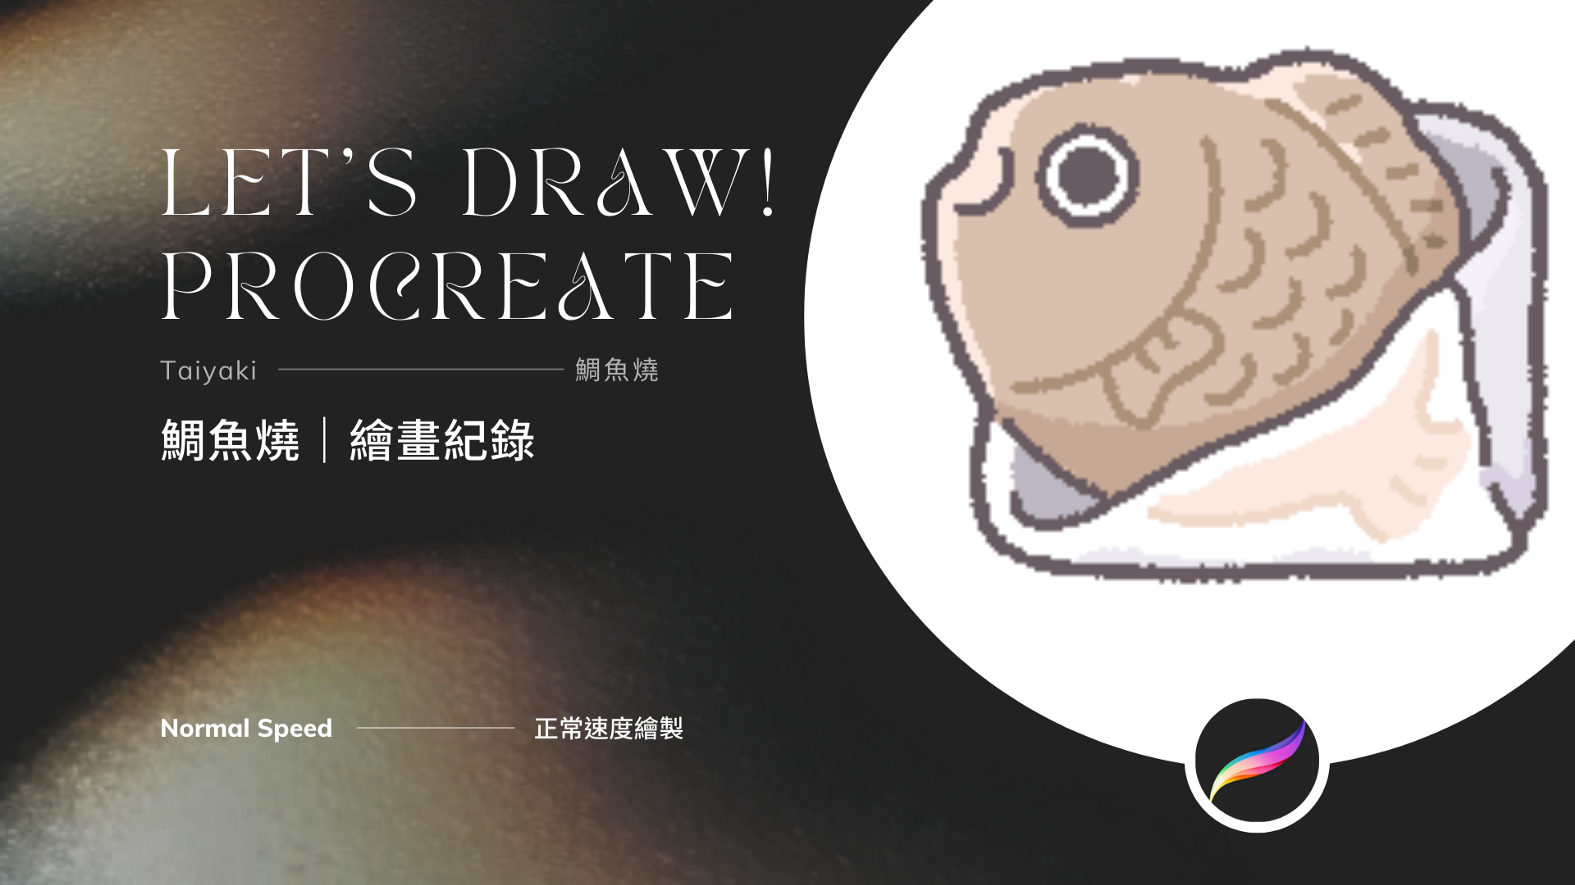 Let’s Draw! Procreate 鯛魚燒繪畫紀錄